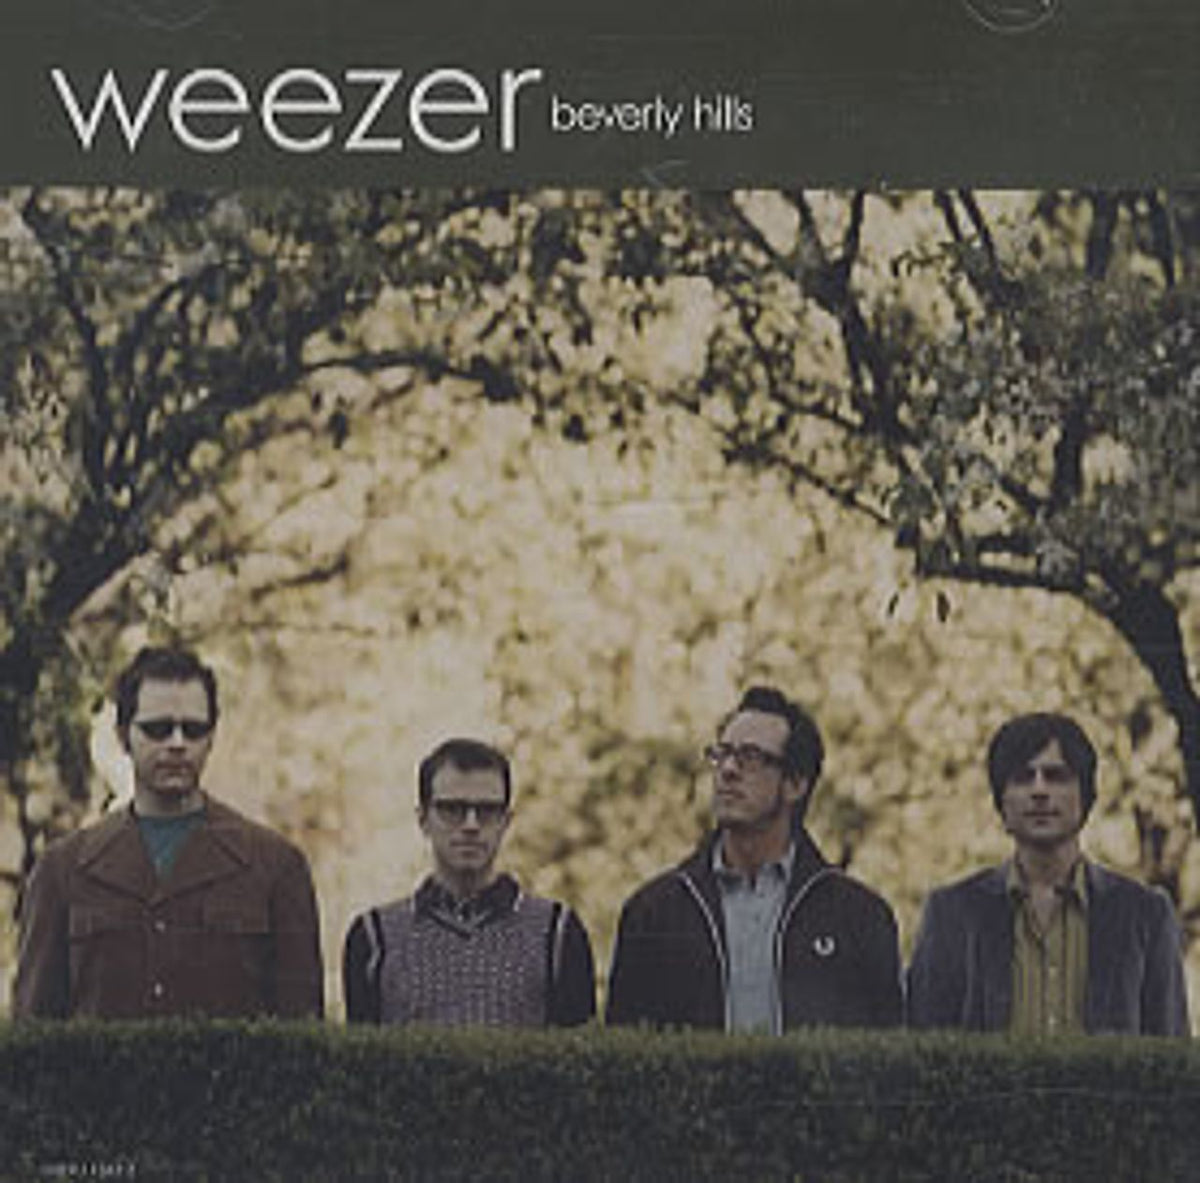 Weezer Beverly Hills US Promo CD single